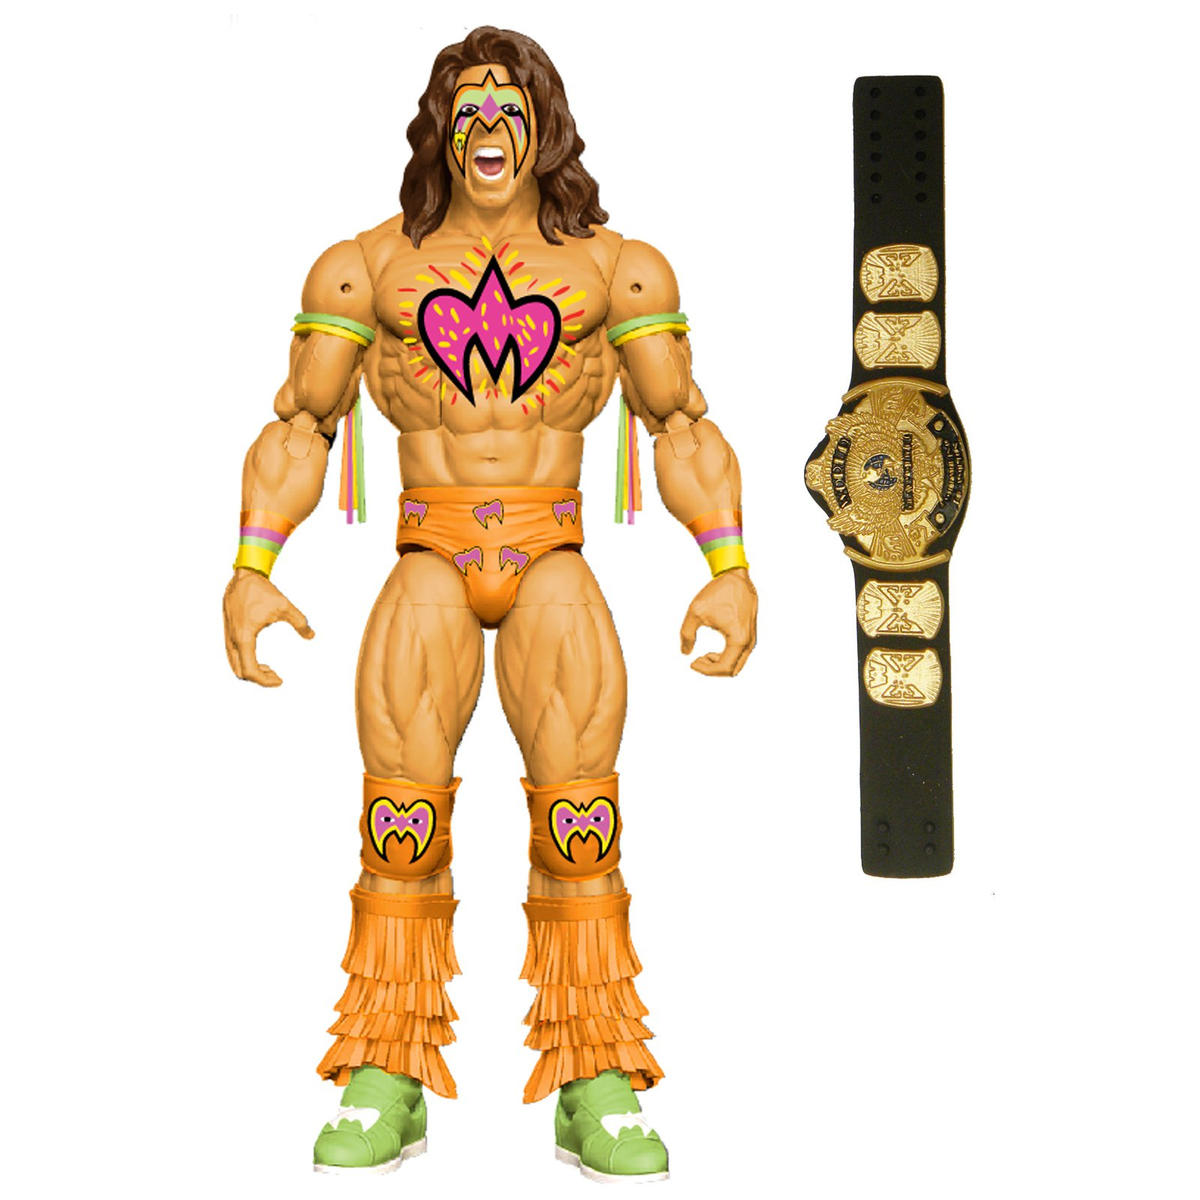 2016 WWE Mattel Elite Collection Lost Legends Ultimate Warrior